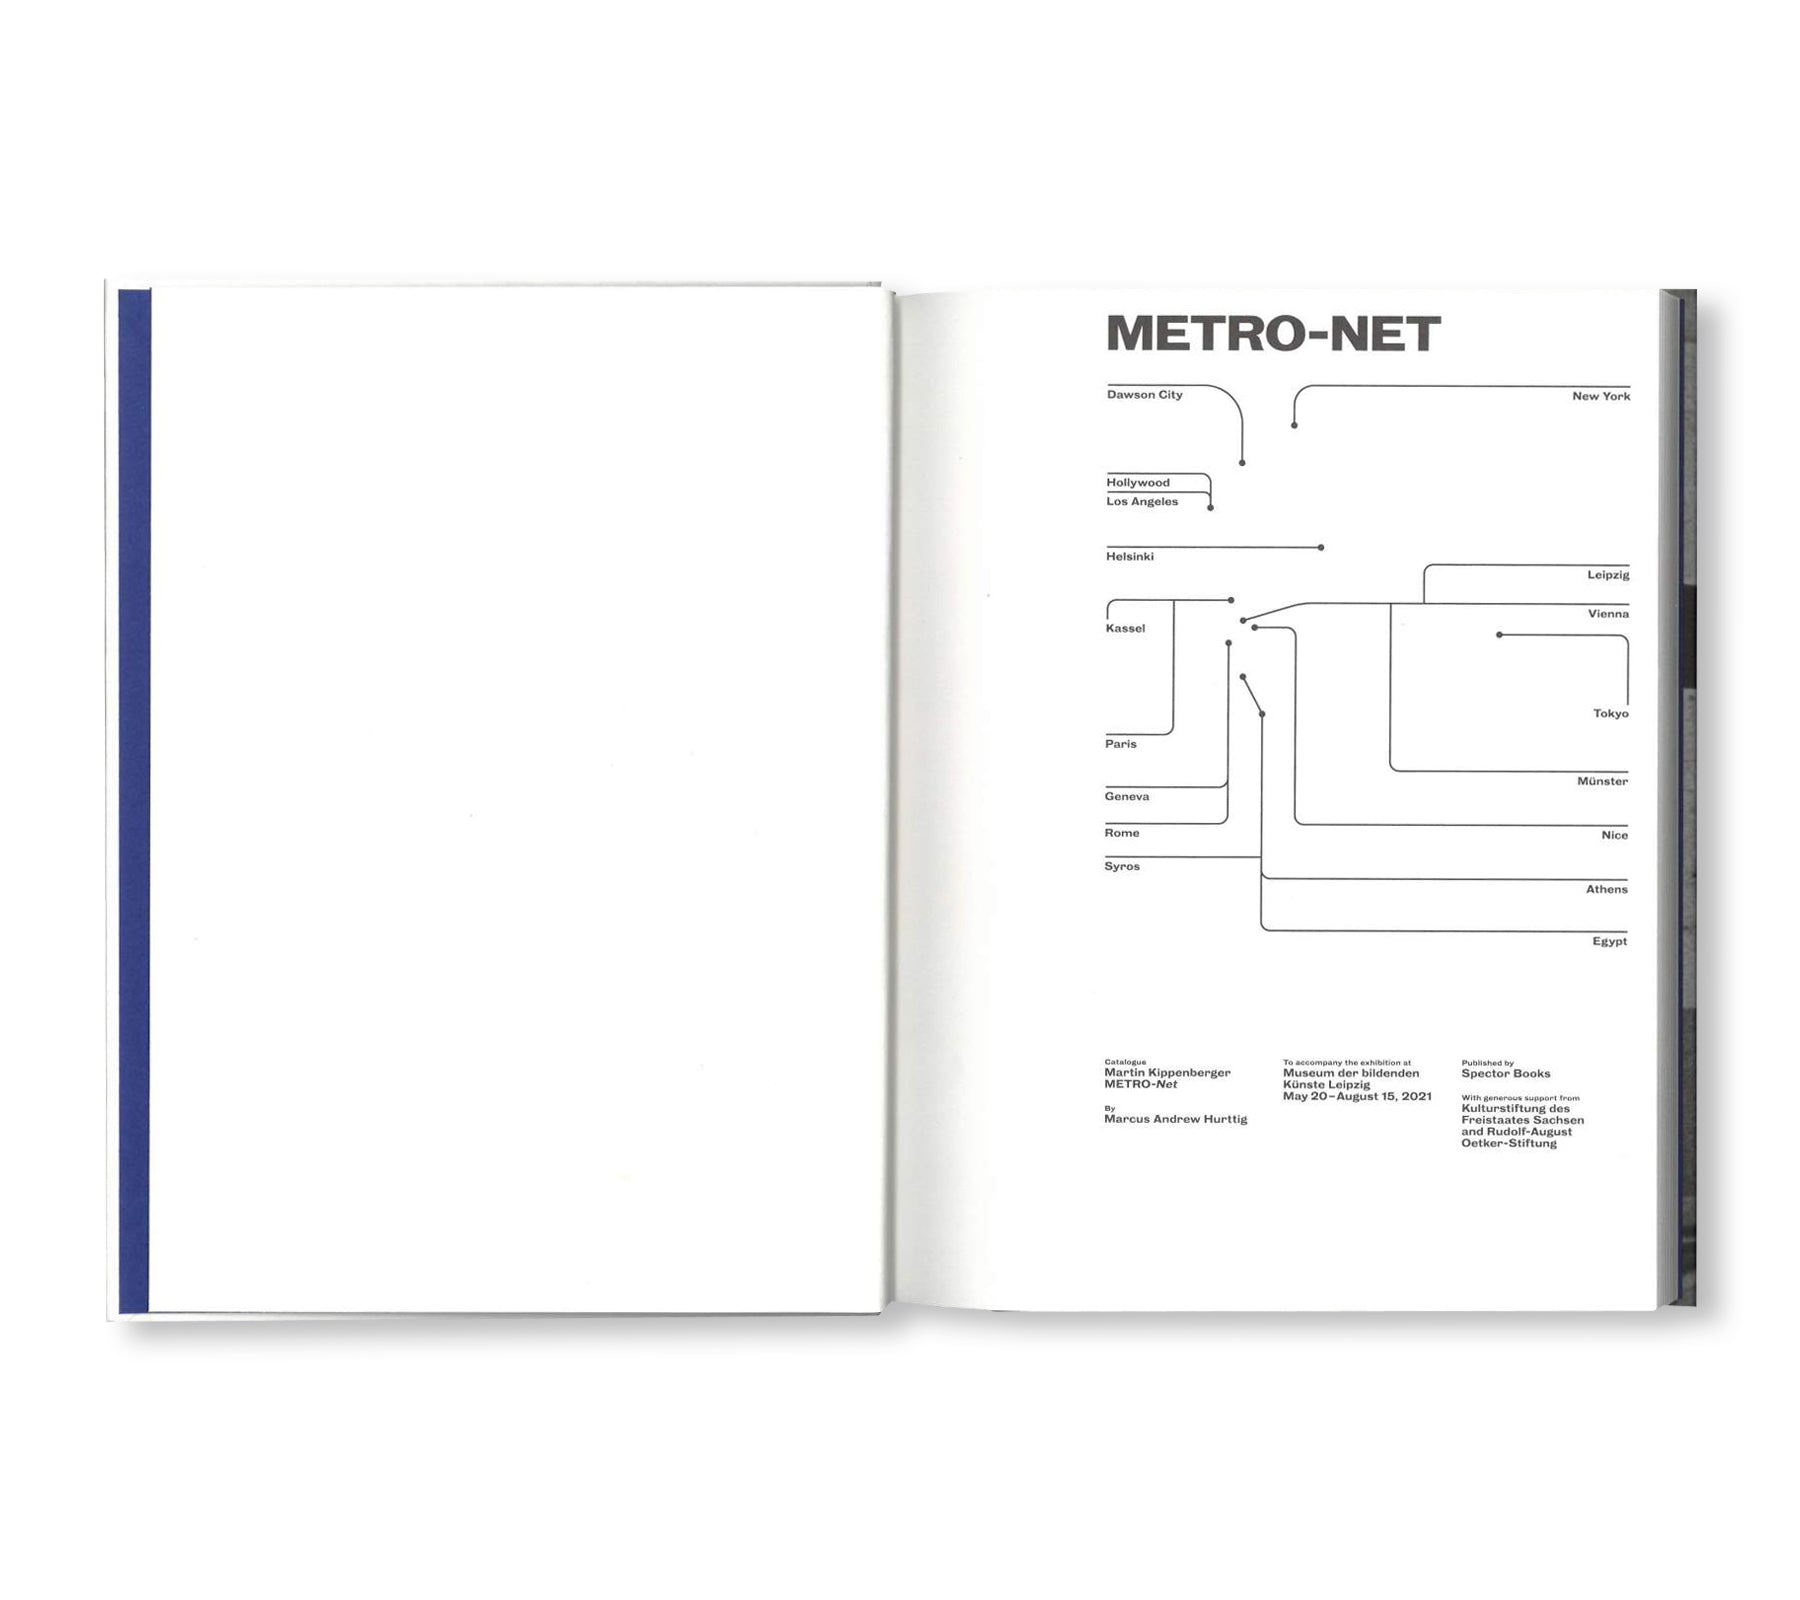 METRO-NET by Martin Kippenberger